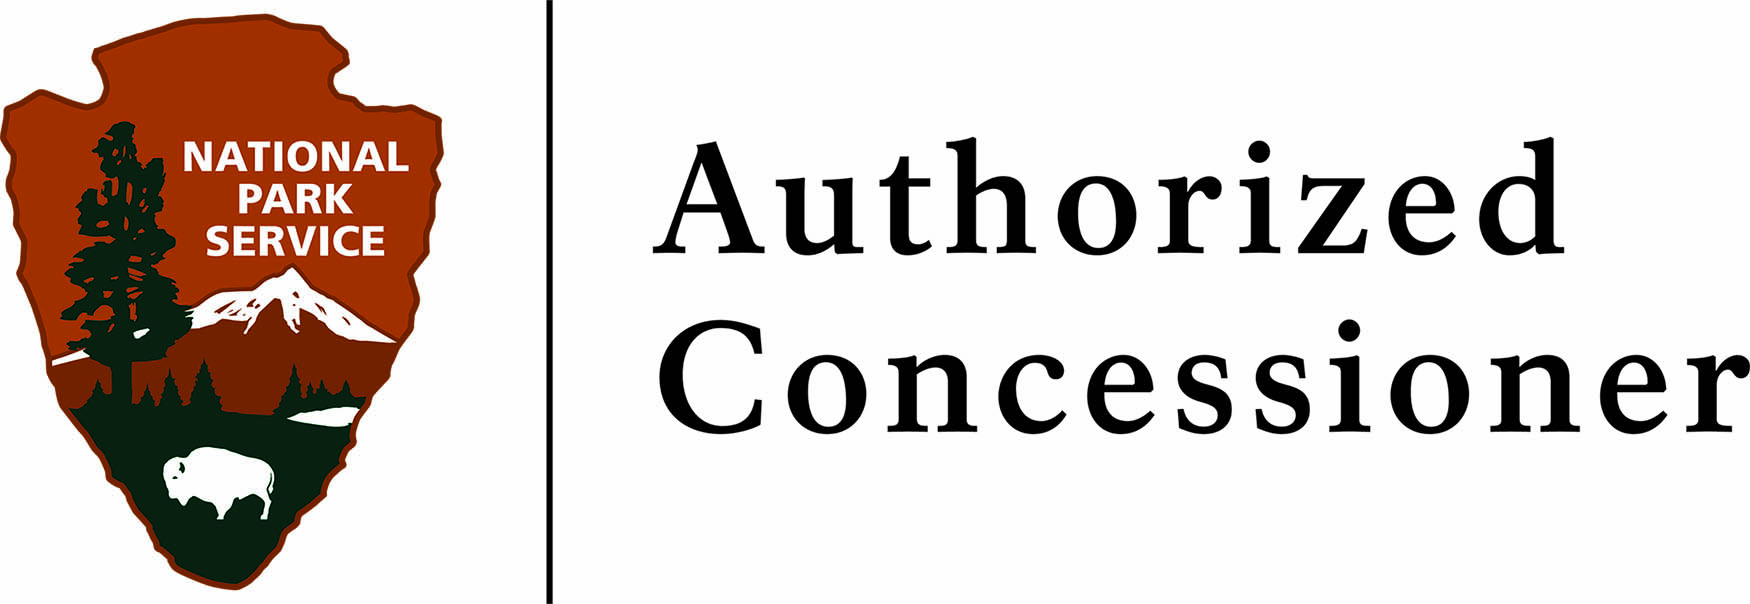 NPS Authorized Concessionaire logo